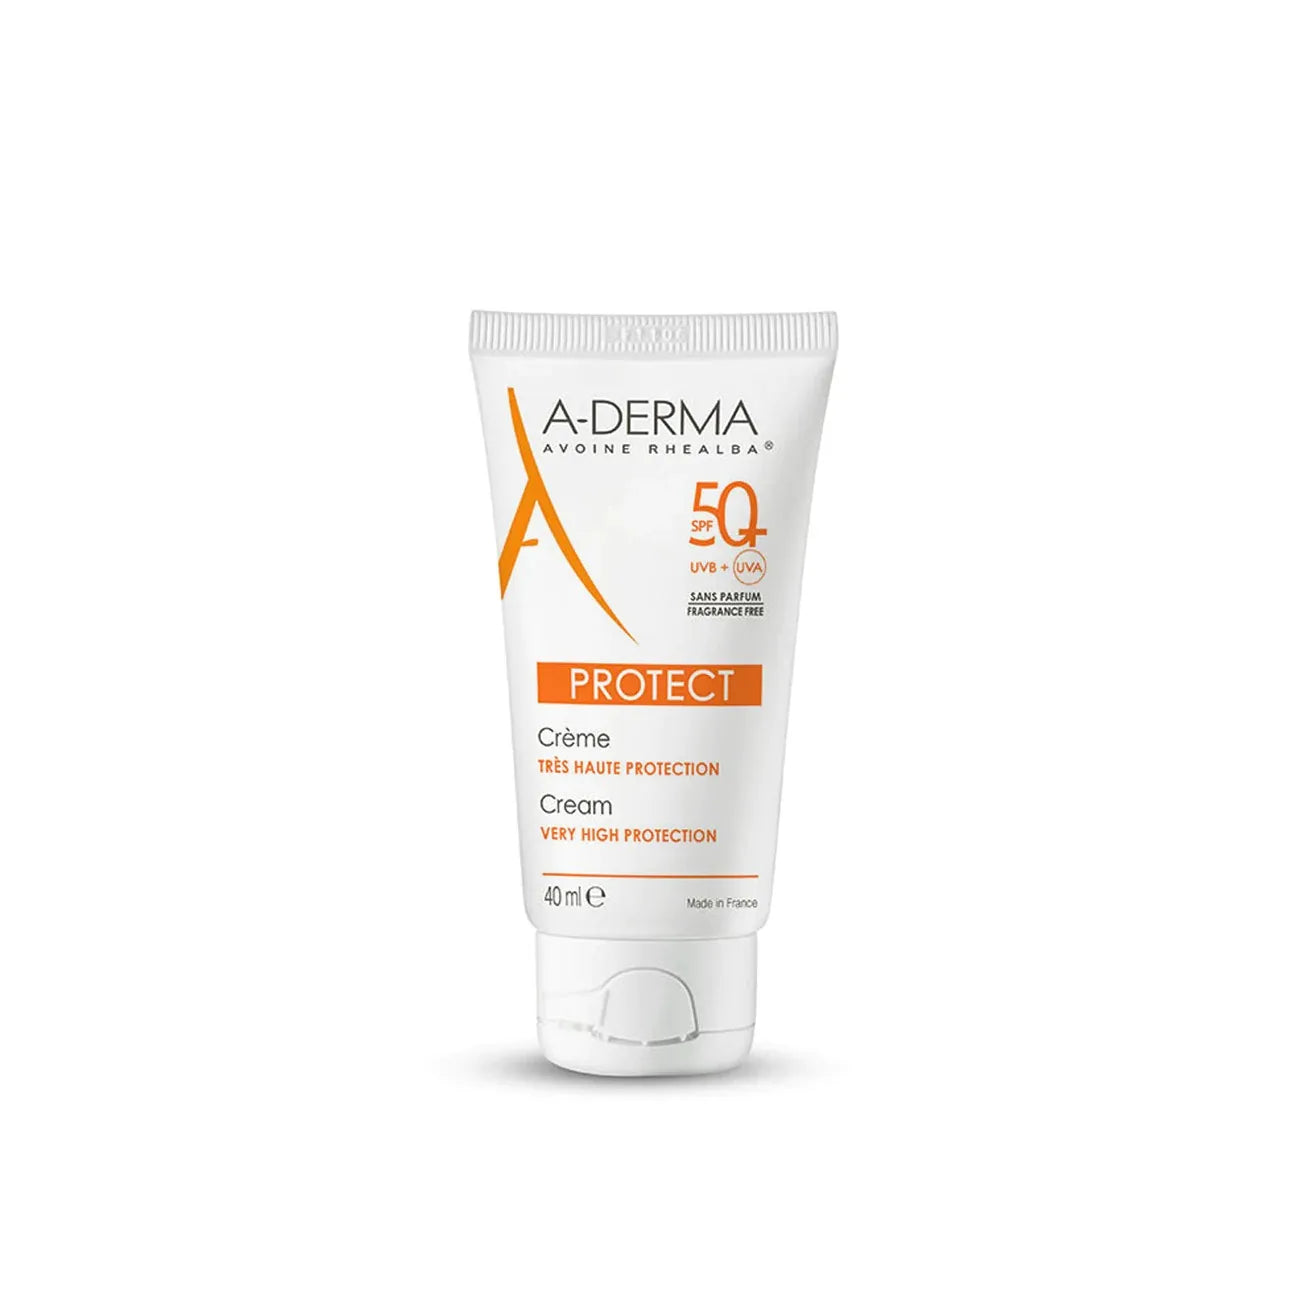 Aderma Protect Cream Spf 50+ Fragrance-free